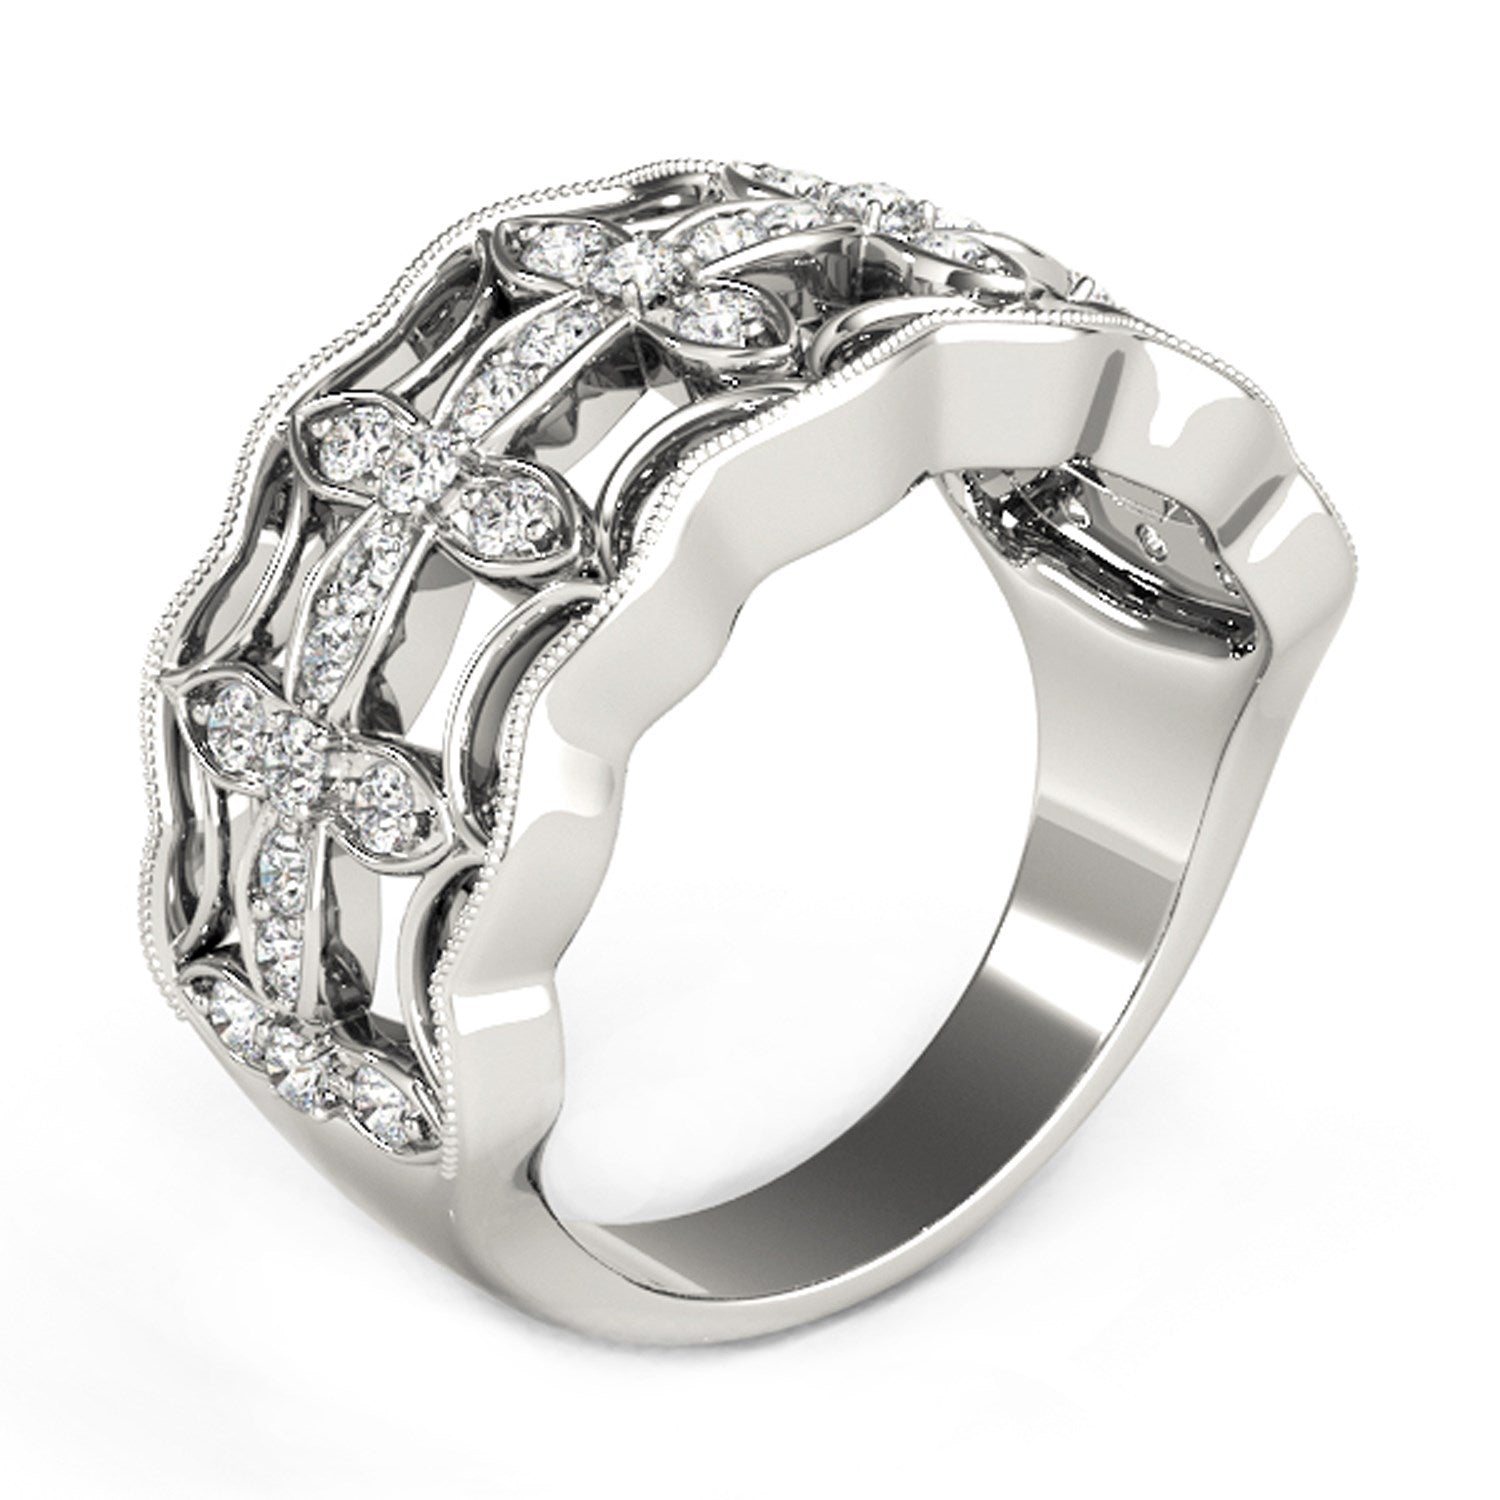 Diamond Studded Four Leaf Clover Motif Ring In 14K White Gold 1 4 Cttw 87677-4